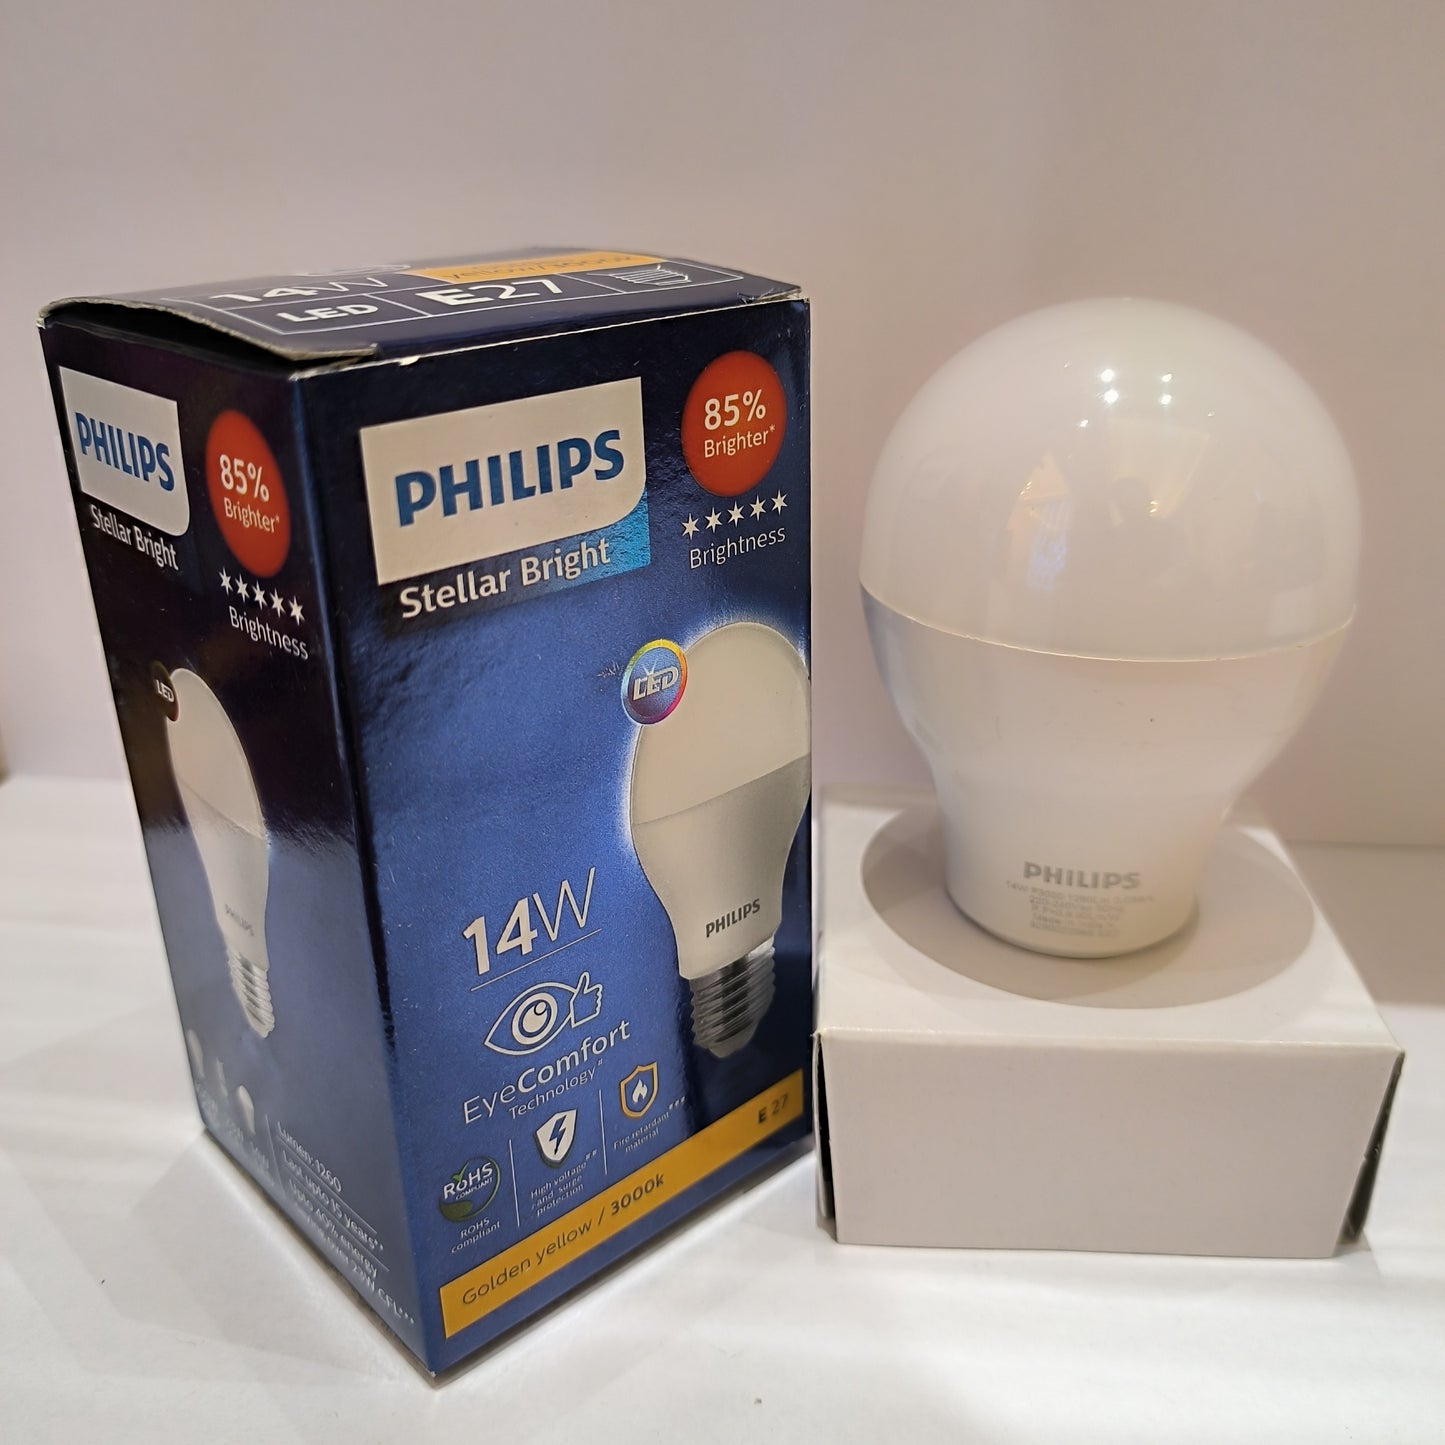 Philips E-27 Stellar Bright 14w LED Bulb Round Shape, Golden Yellow - Best Price for Illuminating Brilliance